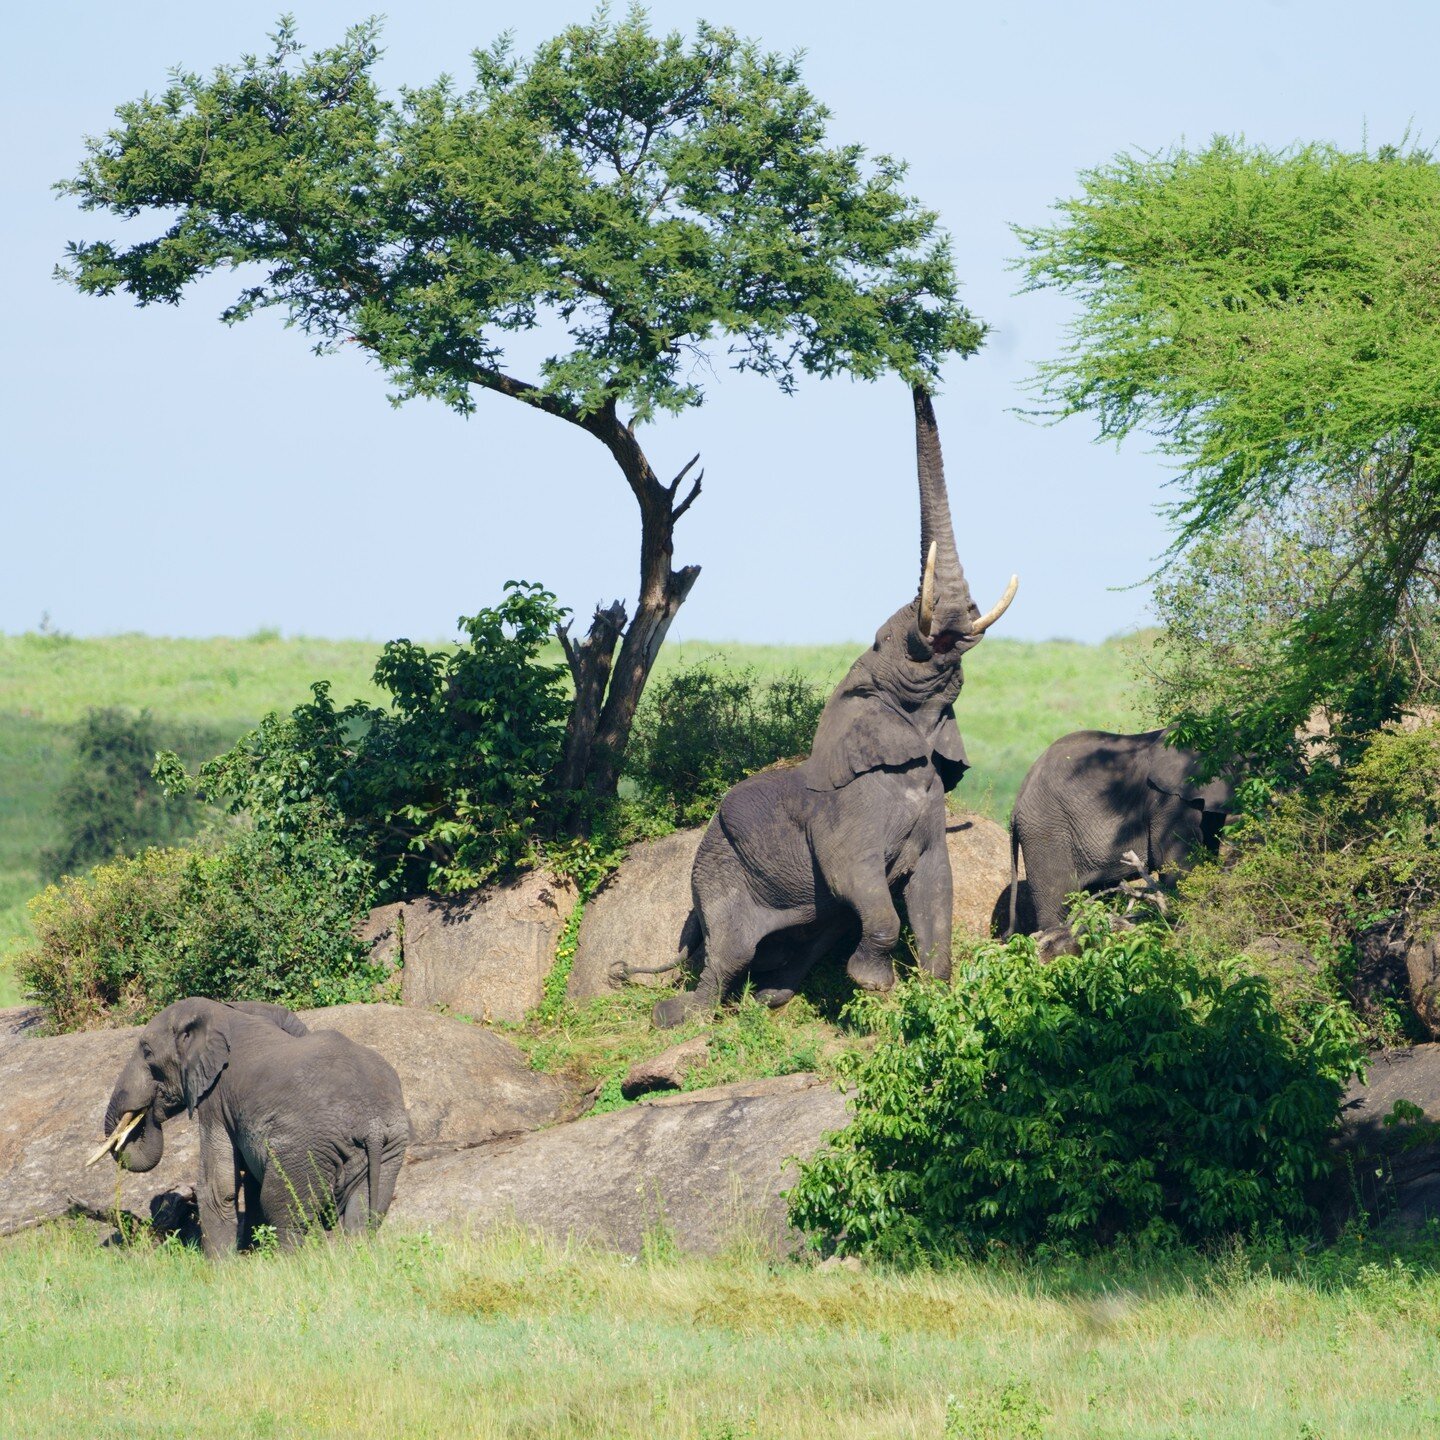 Great shot of a feeding elephant. Taken in early March in Serengeti National Park. #serengeti #elephant